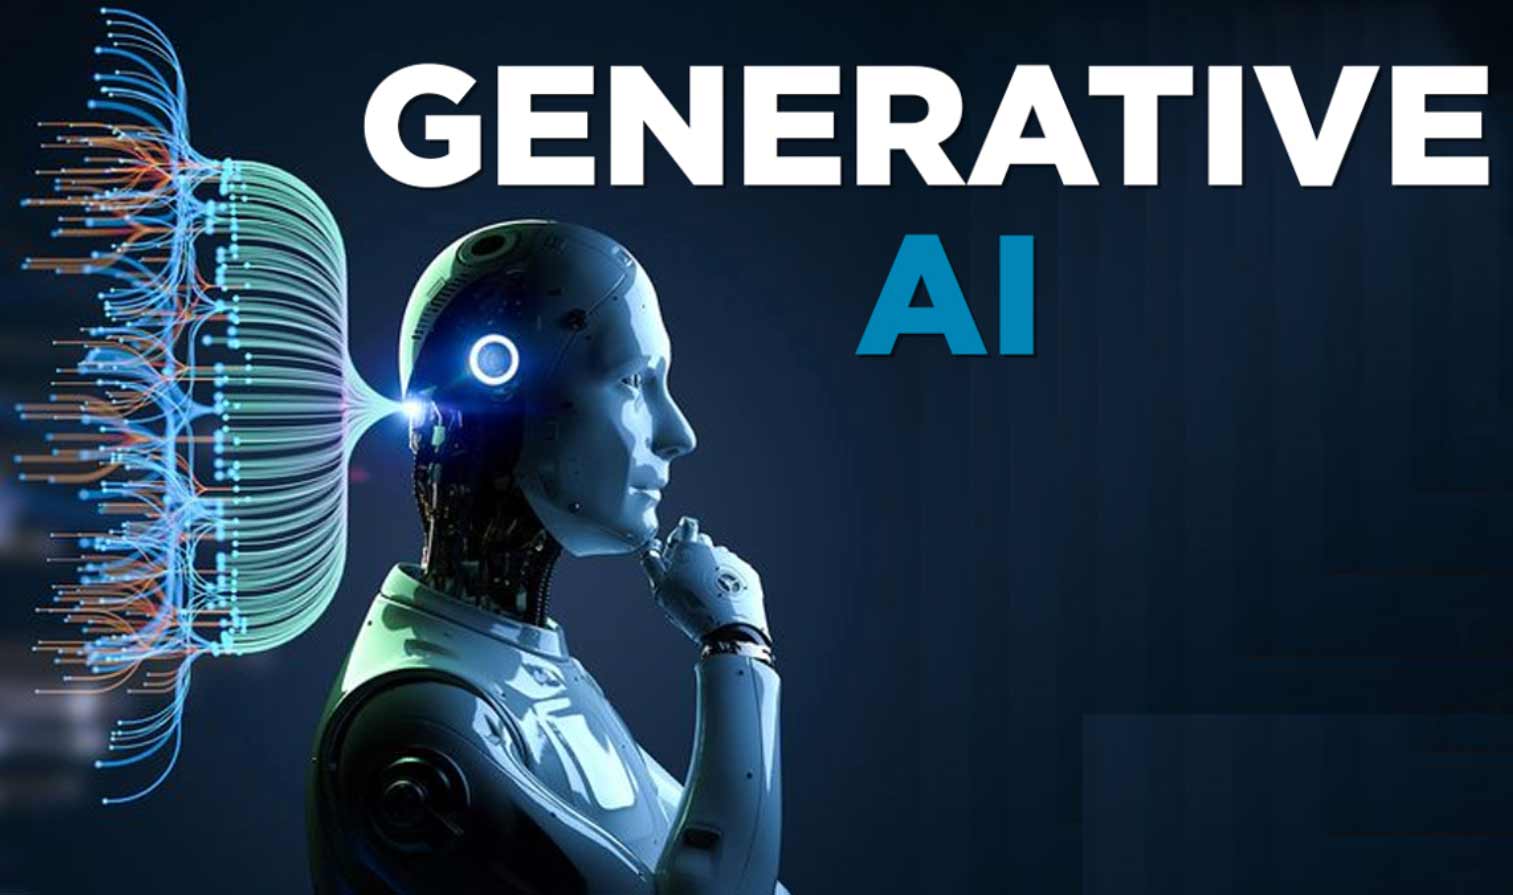 Top Tech Indian Companies and Their Generative AI Platforms